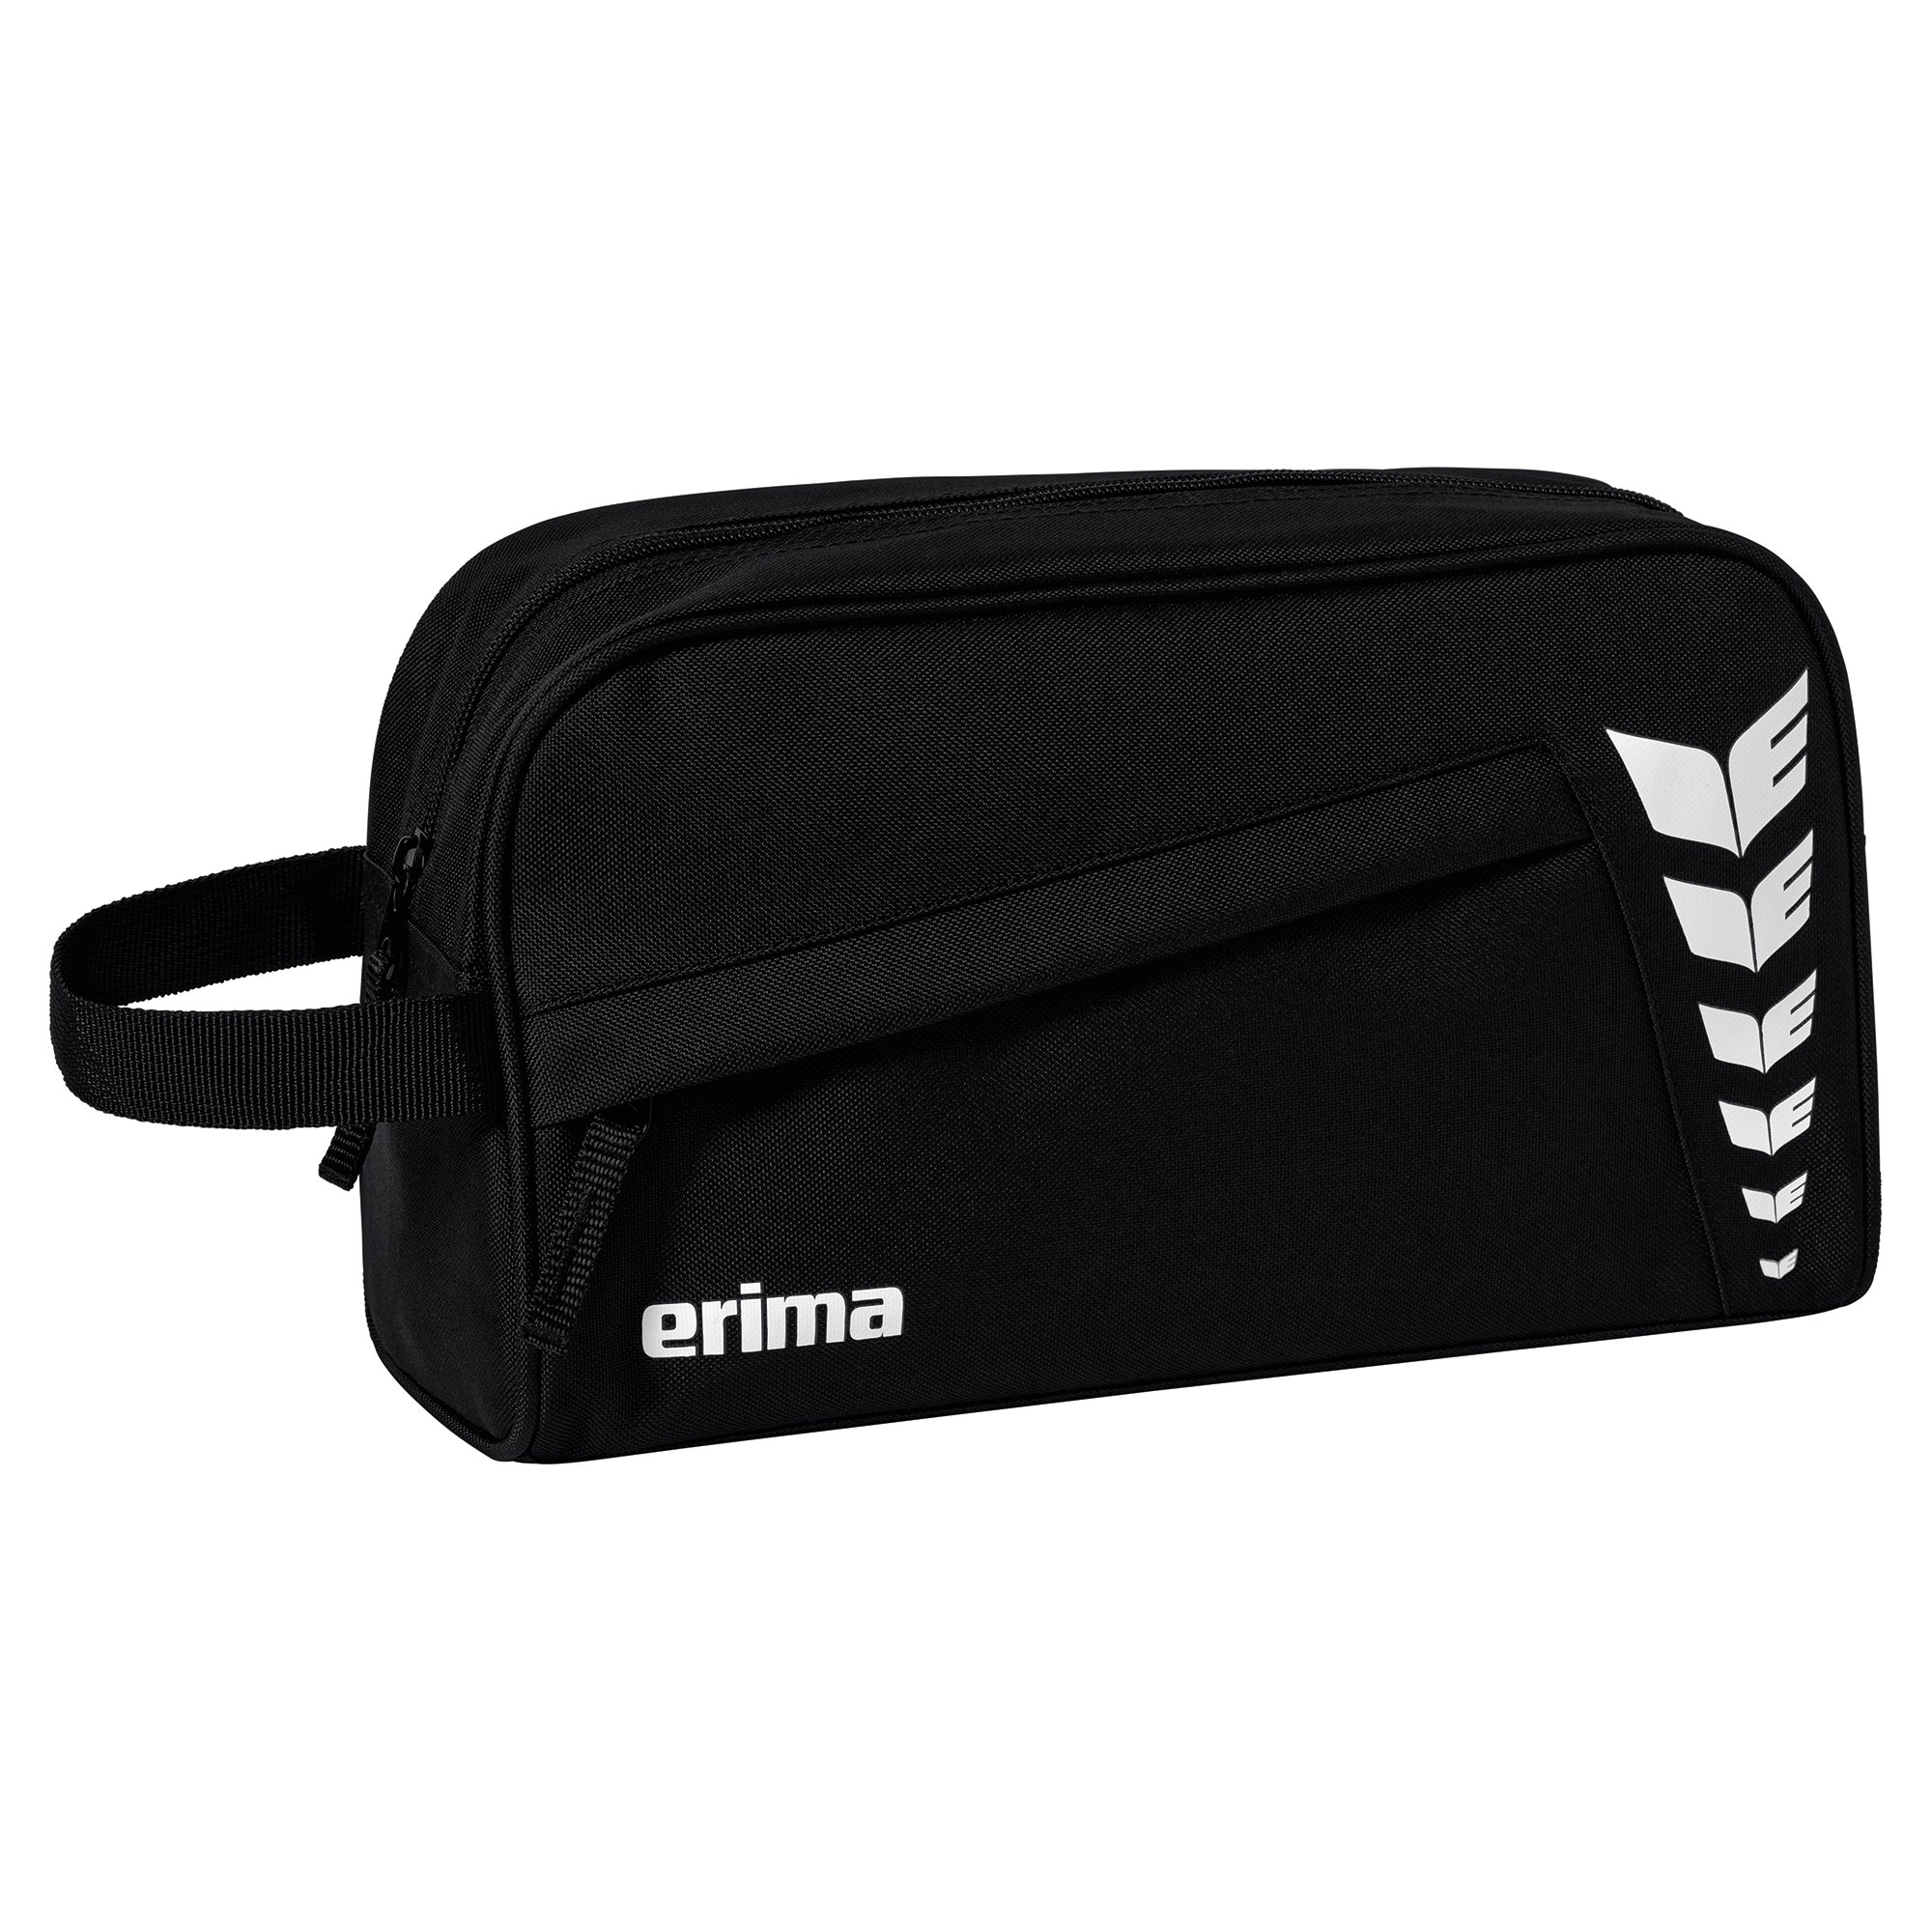 Erima Six Wings Kulturtasche